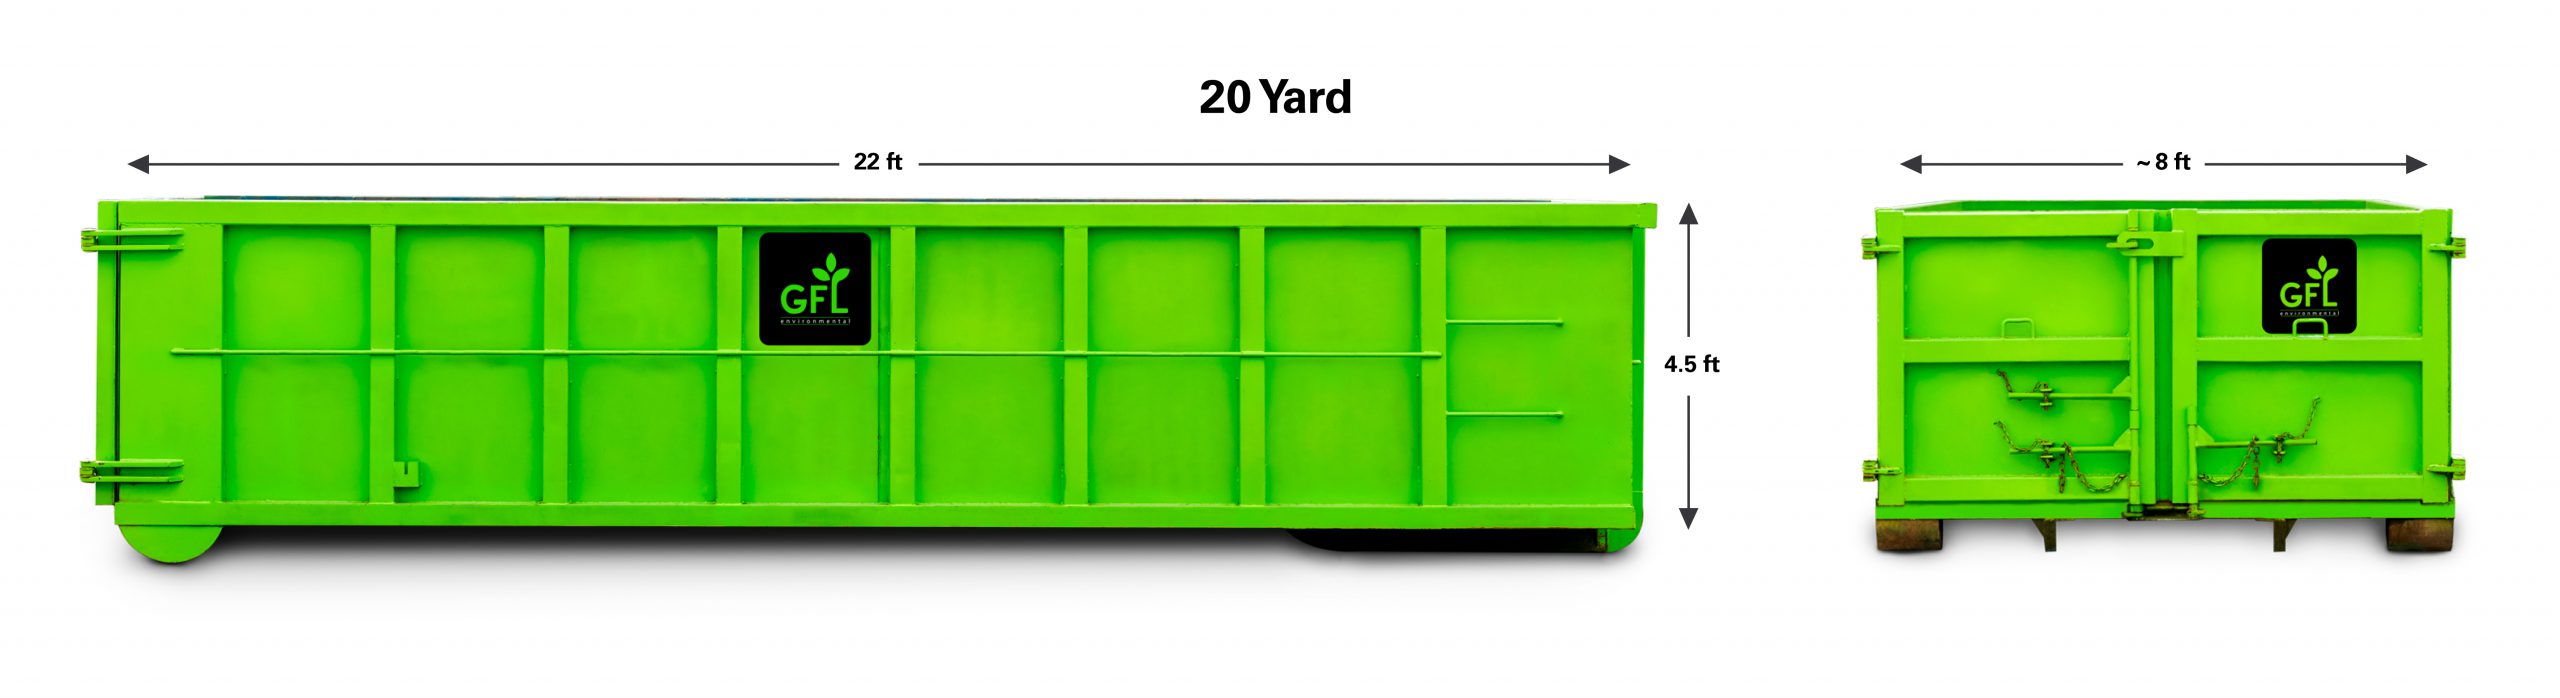 20 Yard Roll-off Dumpsters